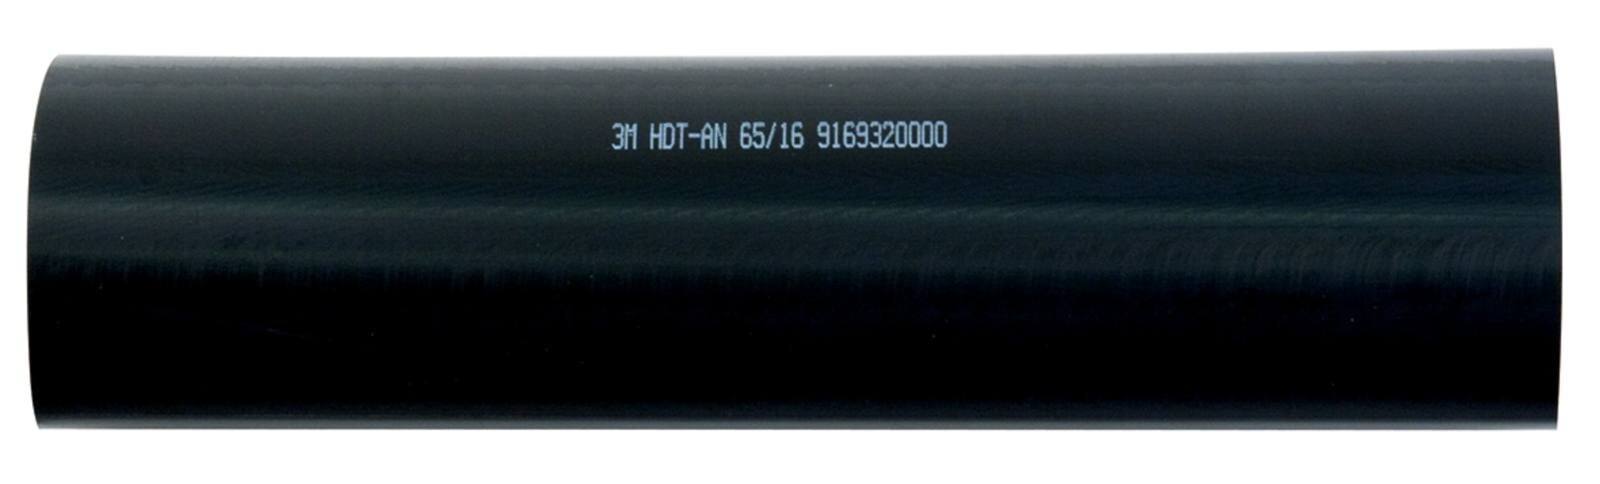 3M HDT-AN Tubo termorretráctil de pared gruesa con adhesivo, negro, 65/16 mm, 1 m